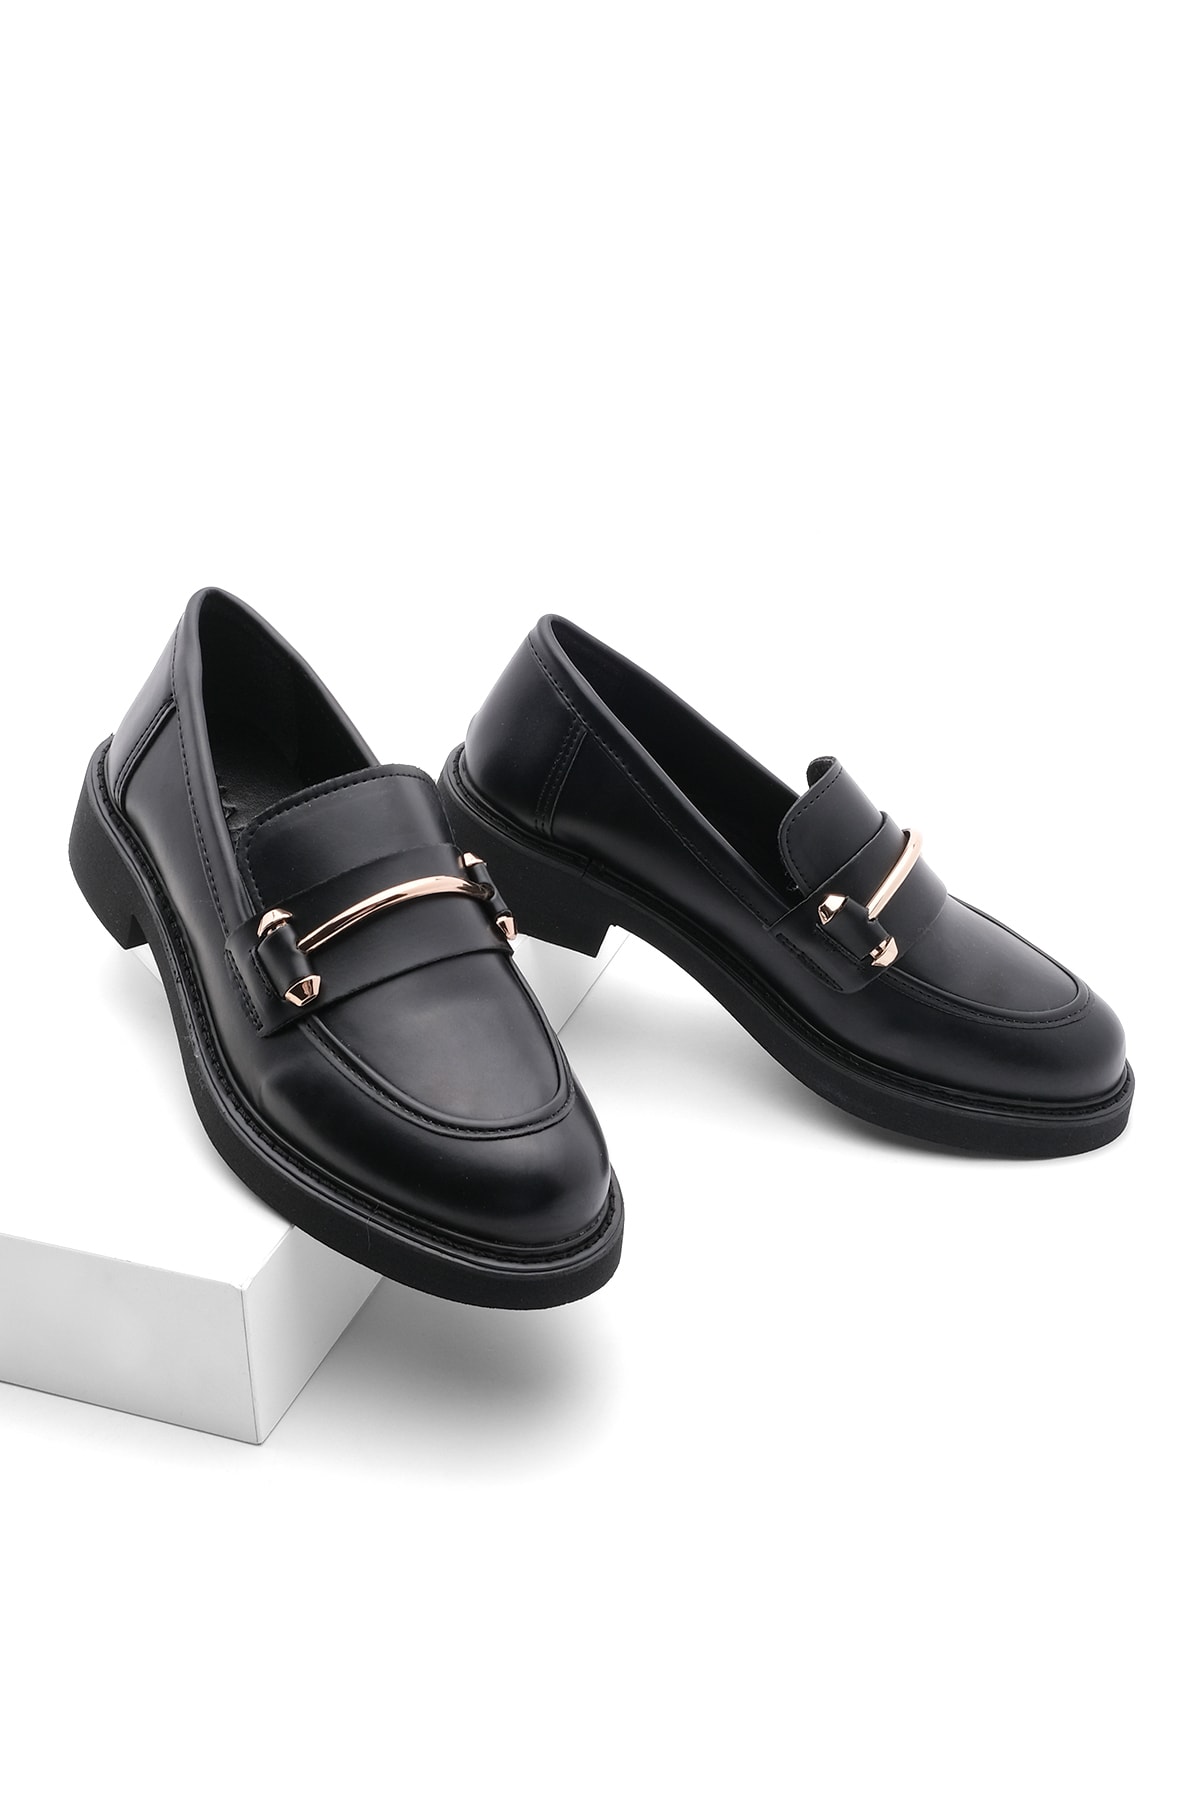 Marjin Women's Loafers Loafers Casual Buckle Casual Shoes Foryewear Black.